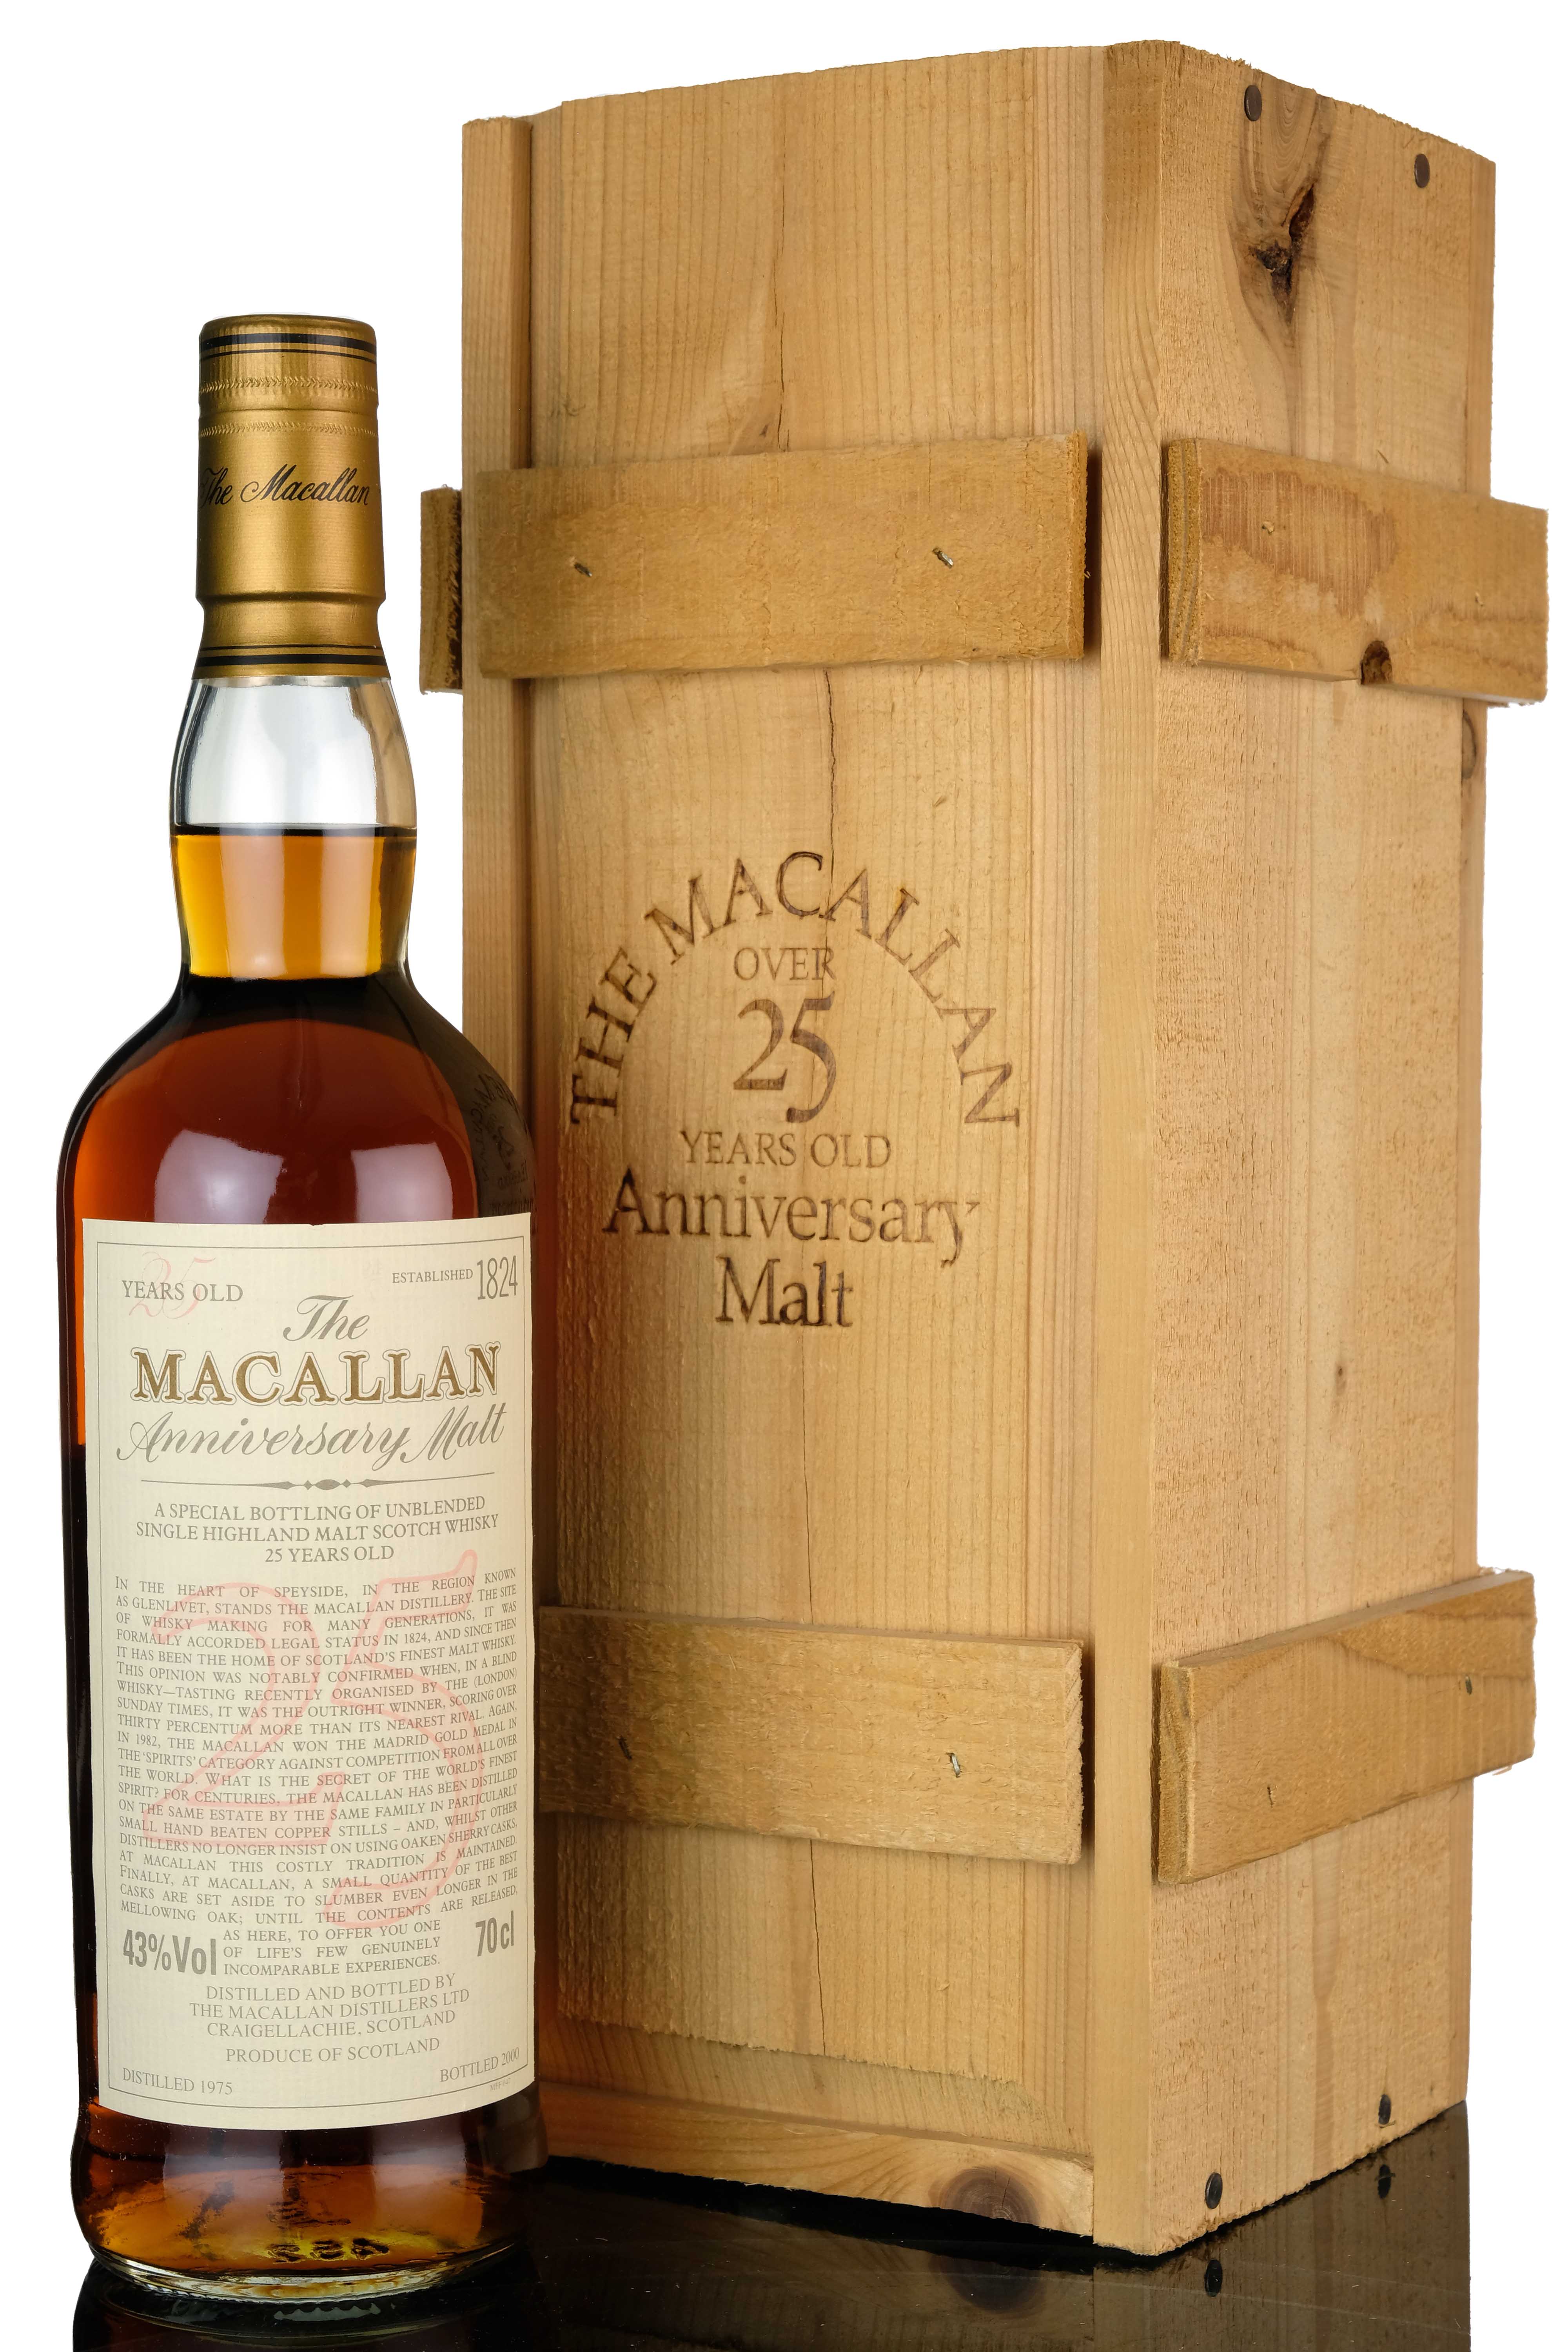 Macallan 1975-2000 - 25 Year Old - Anniversary Malt